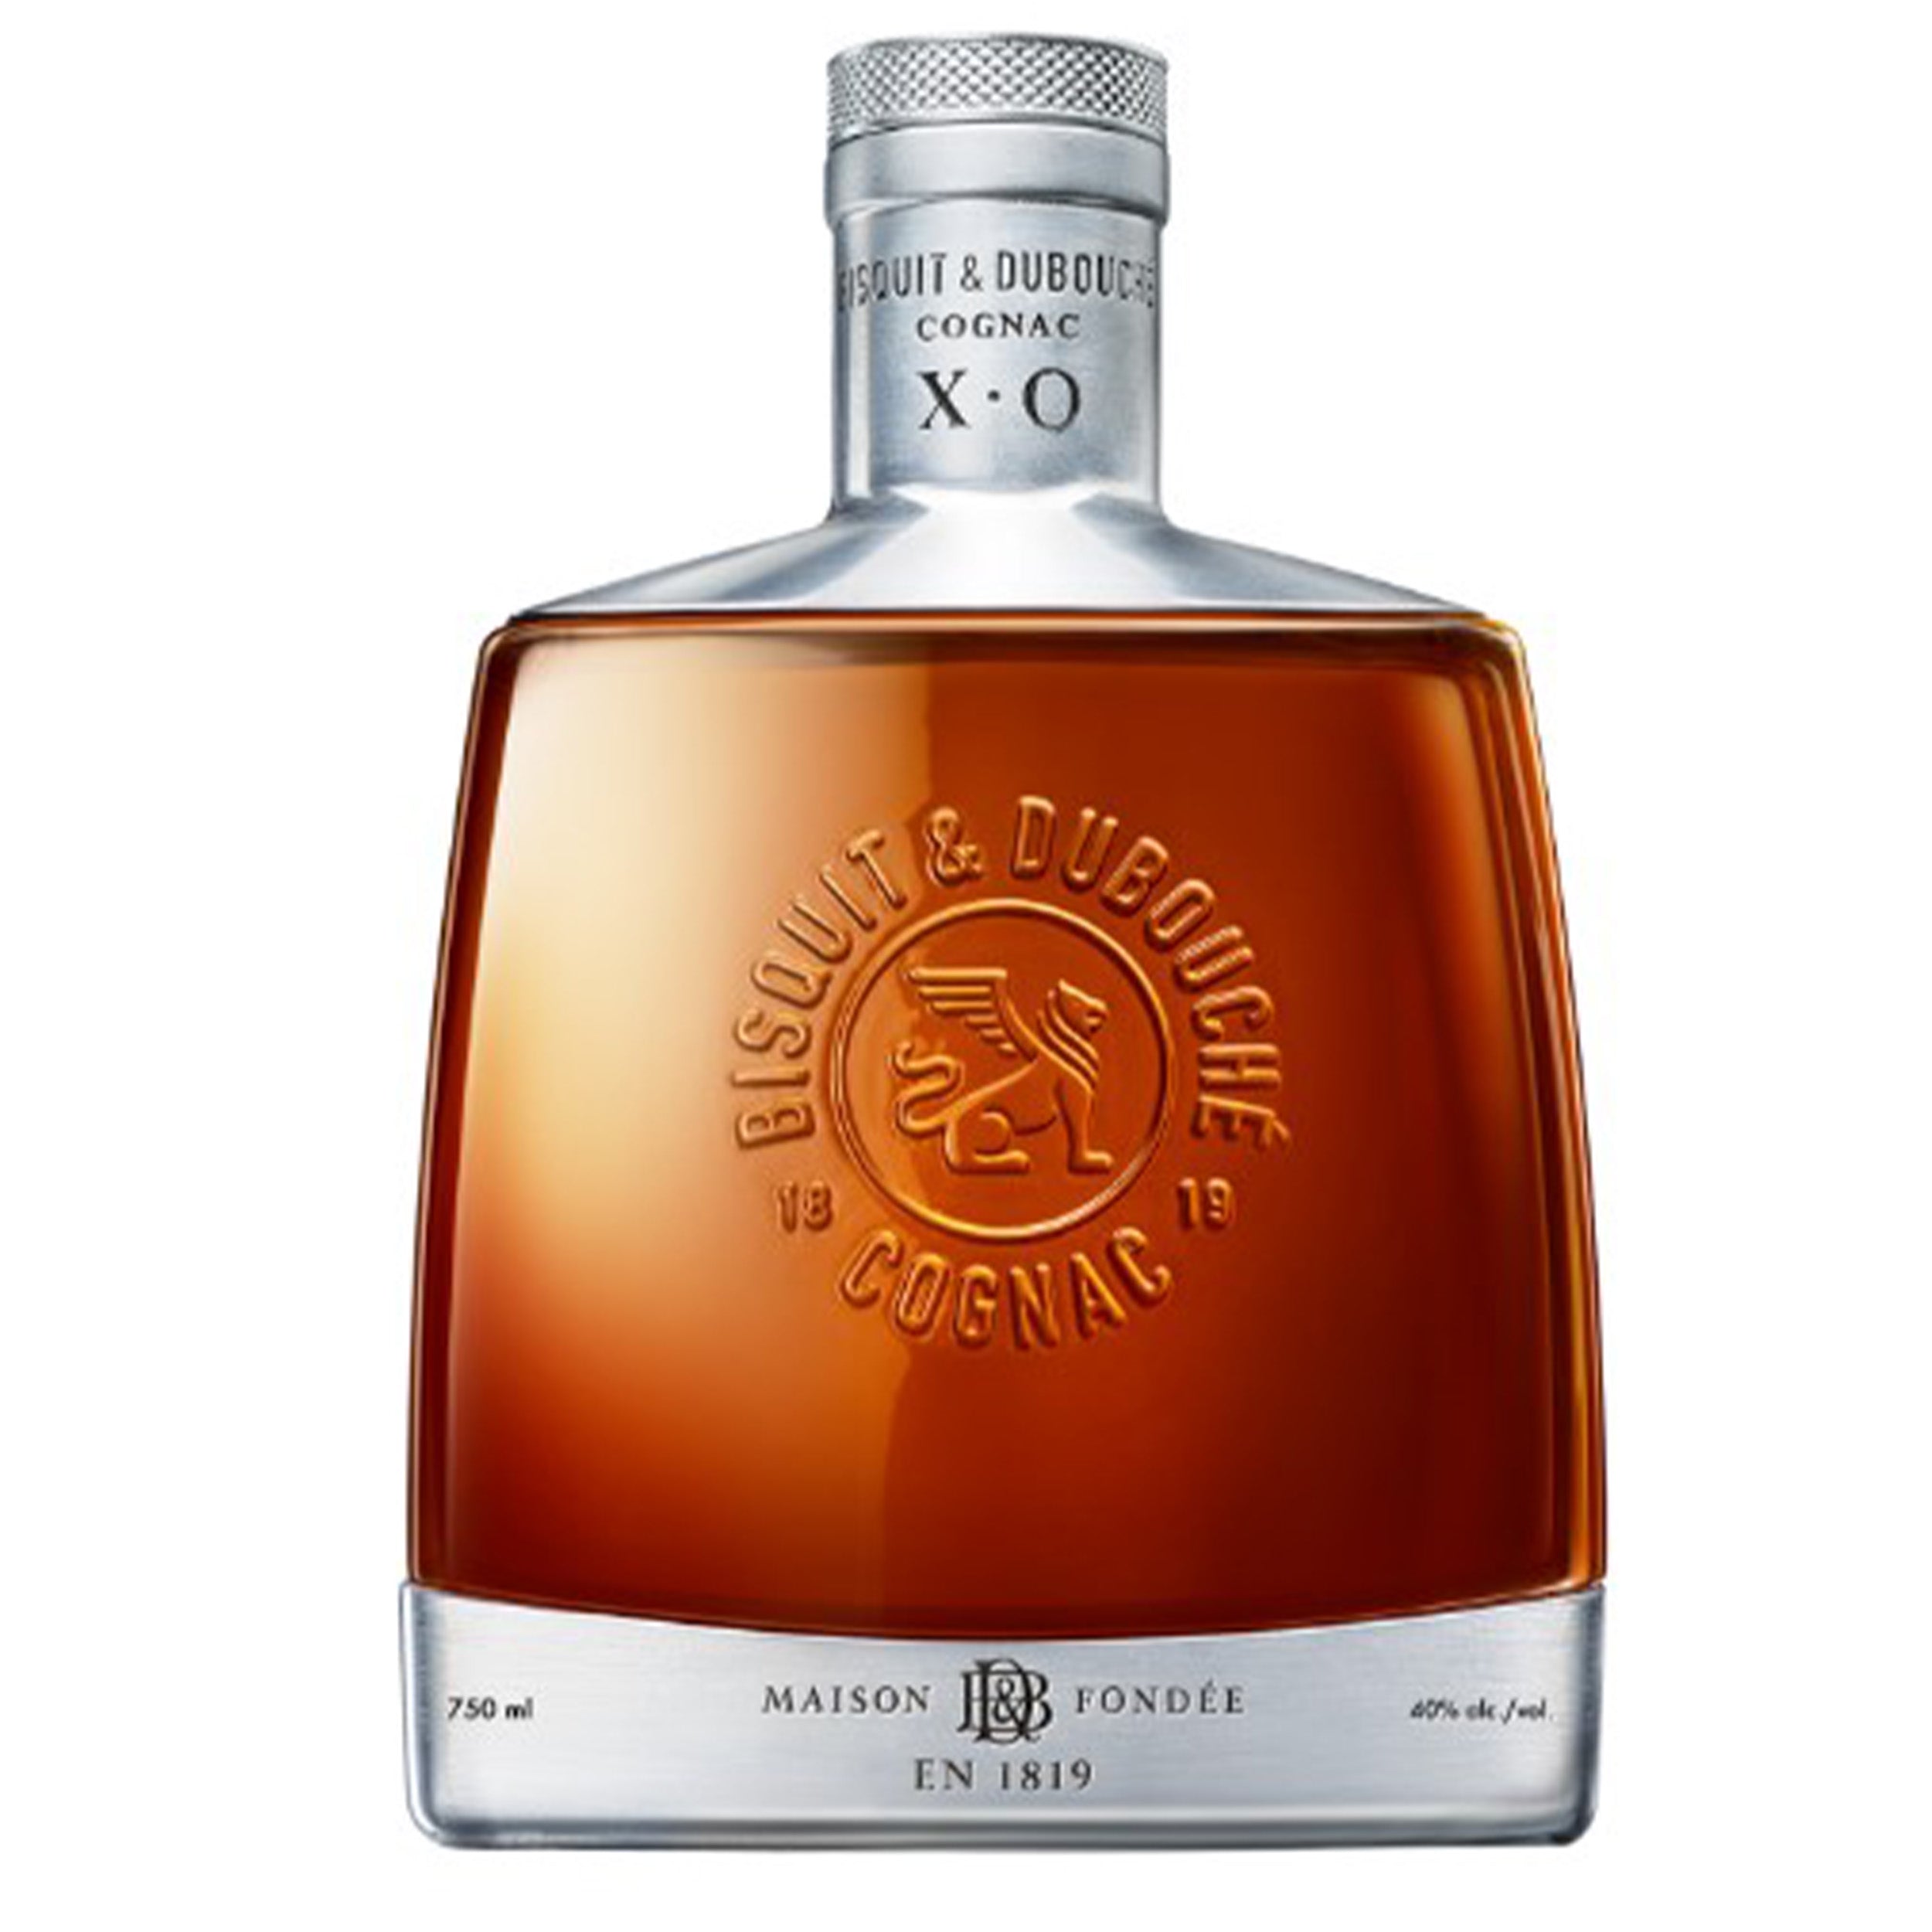 Hennessy XXO Hors d'Age Cognac 70cl - Cognac Expert